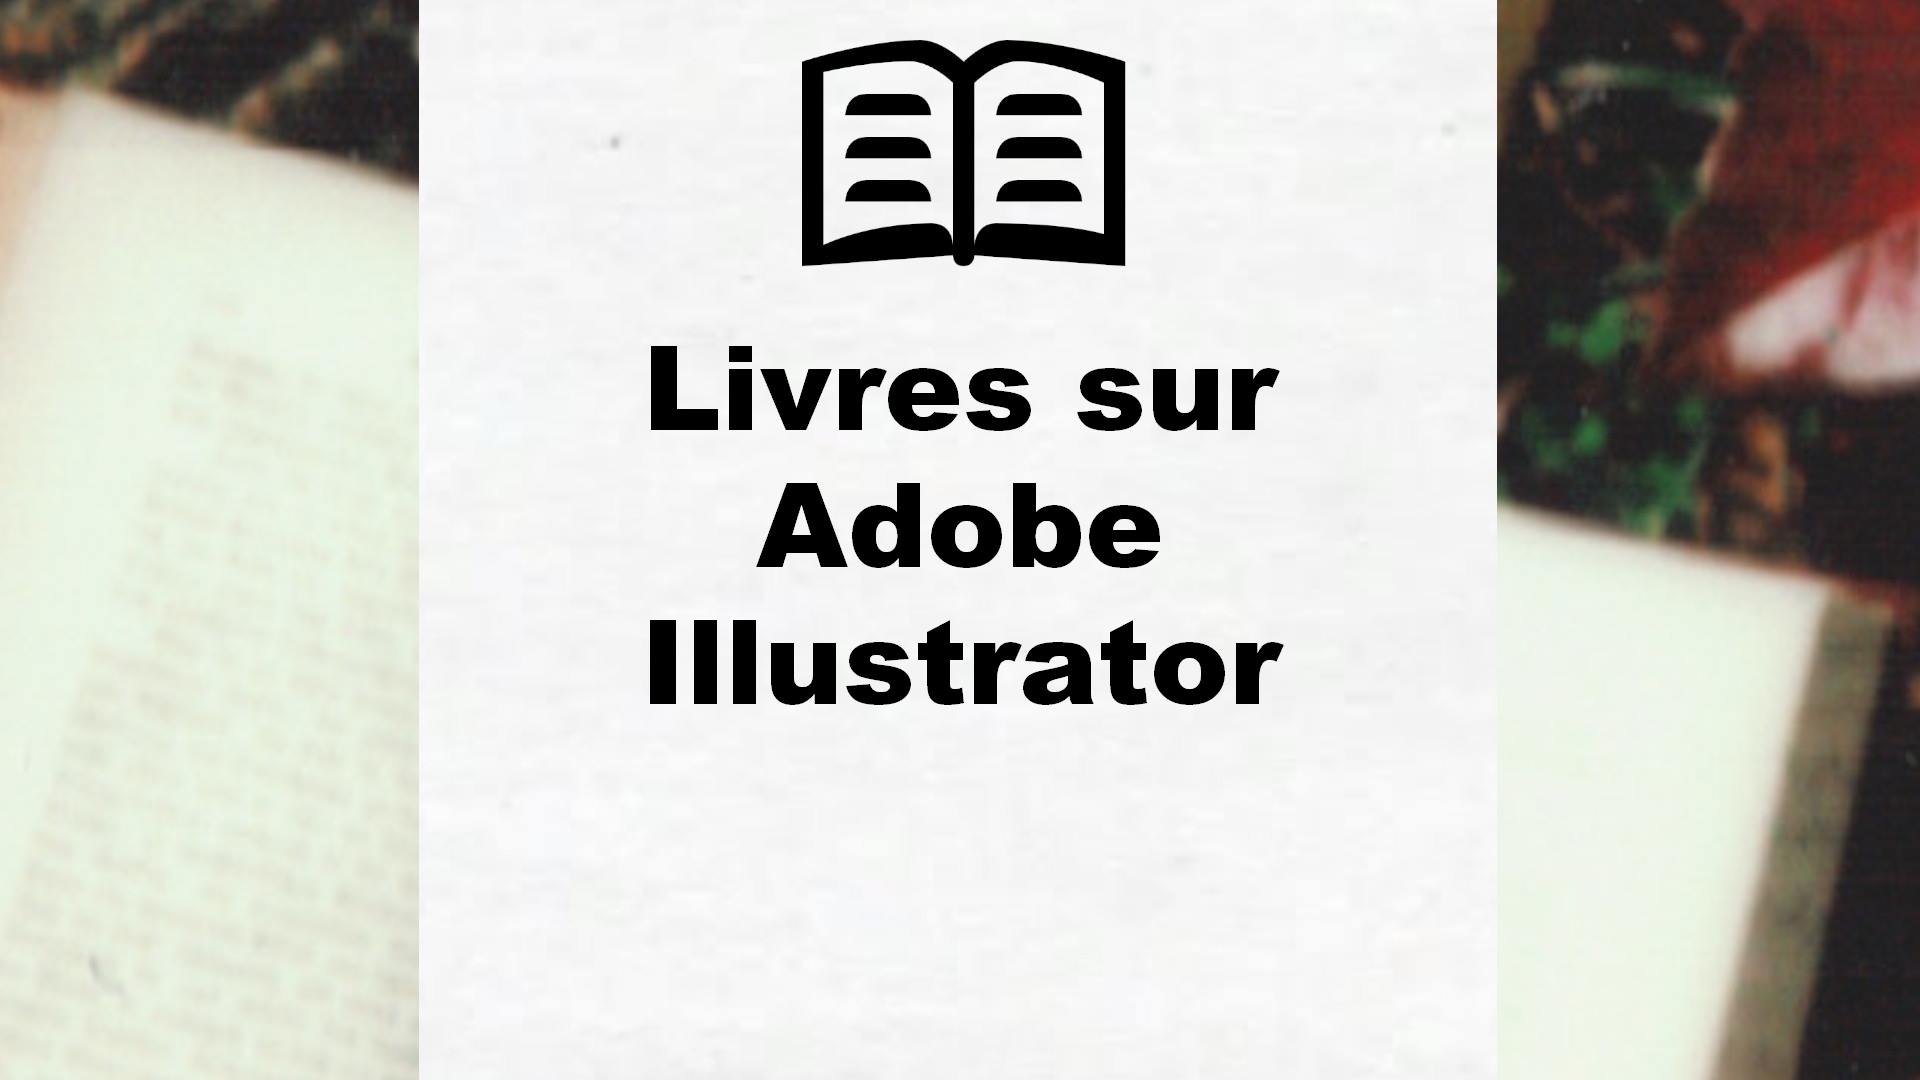 Livres sur Adobe Illustrator